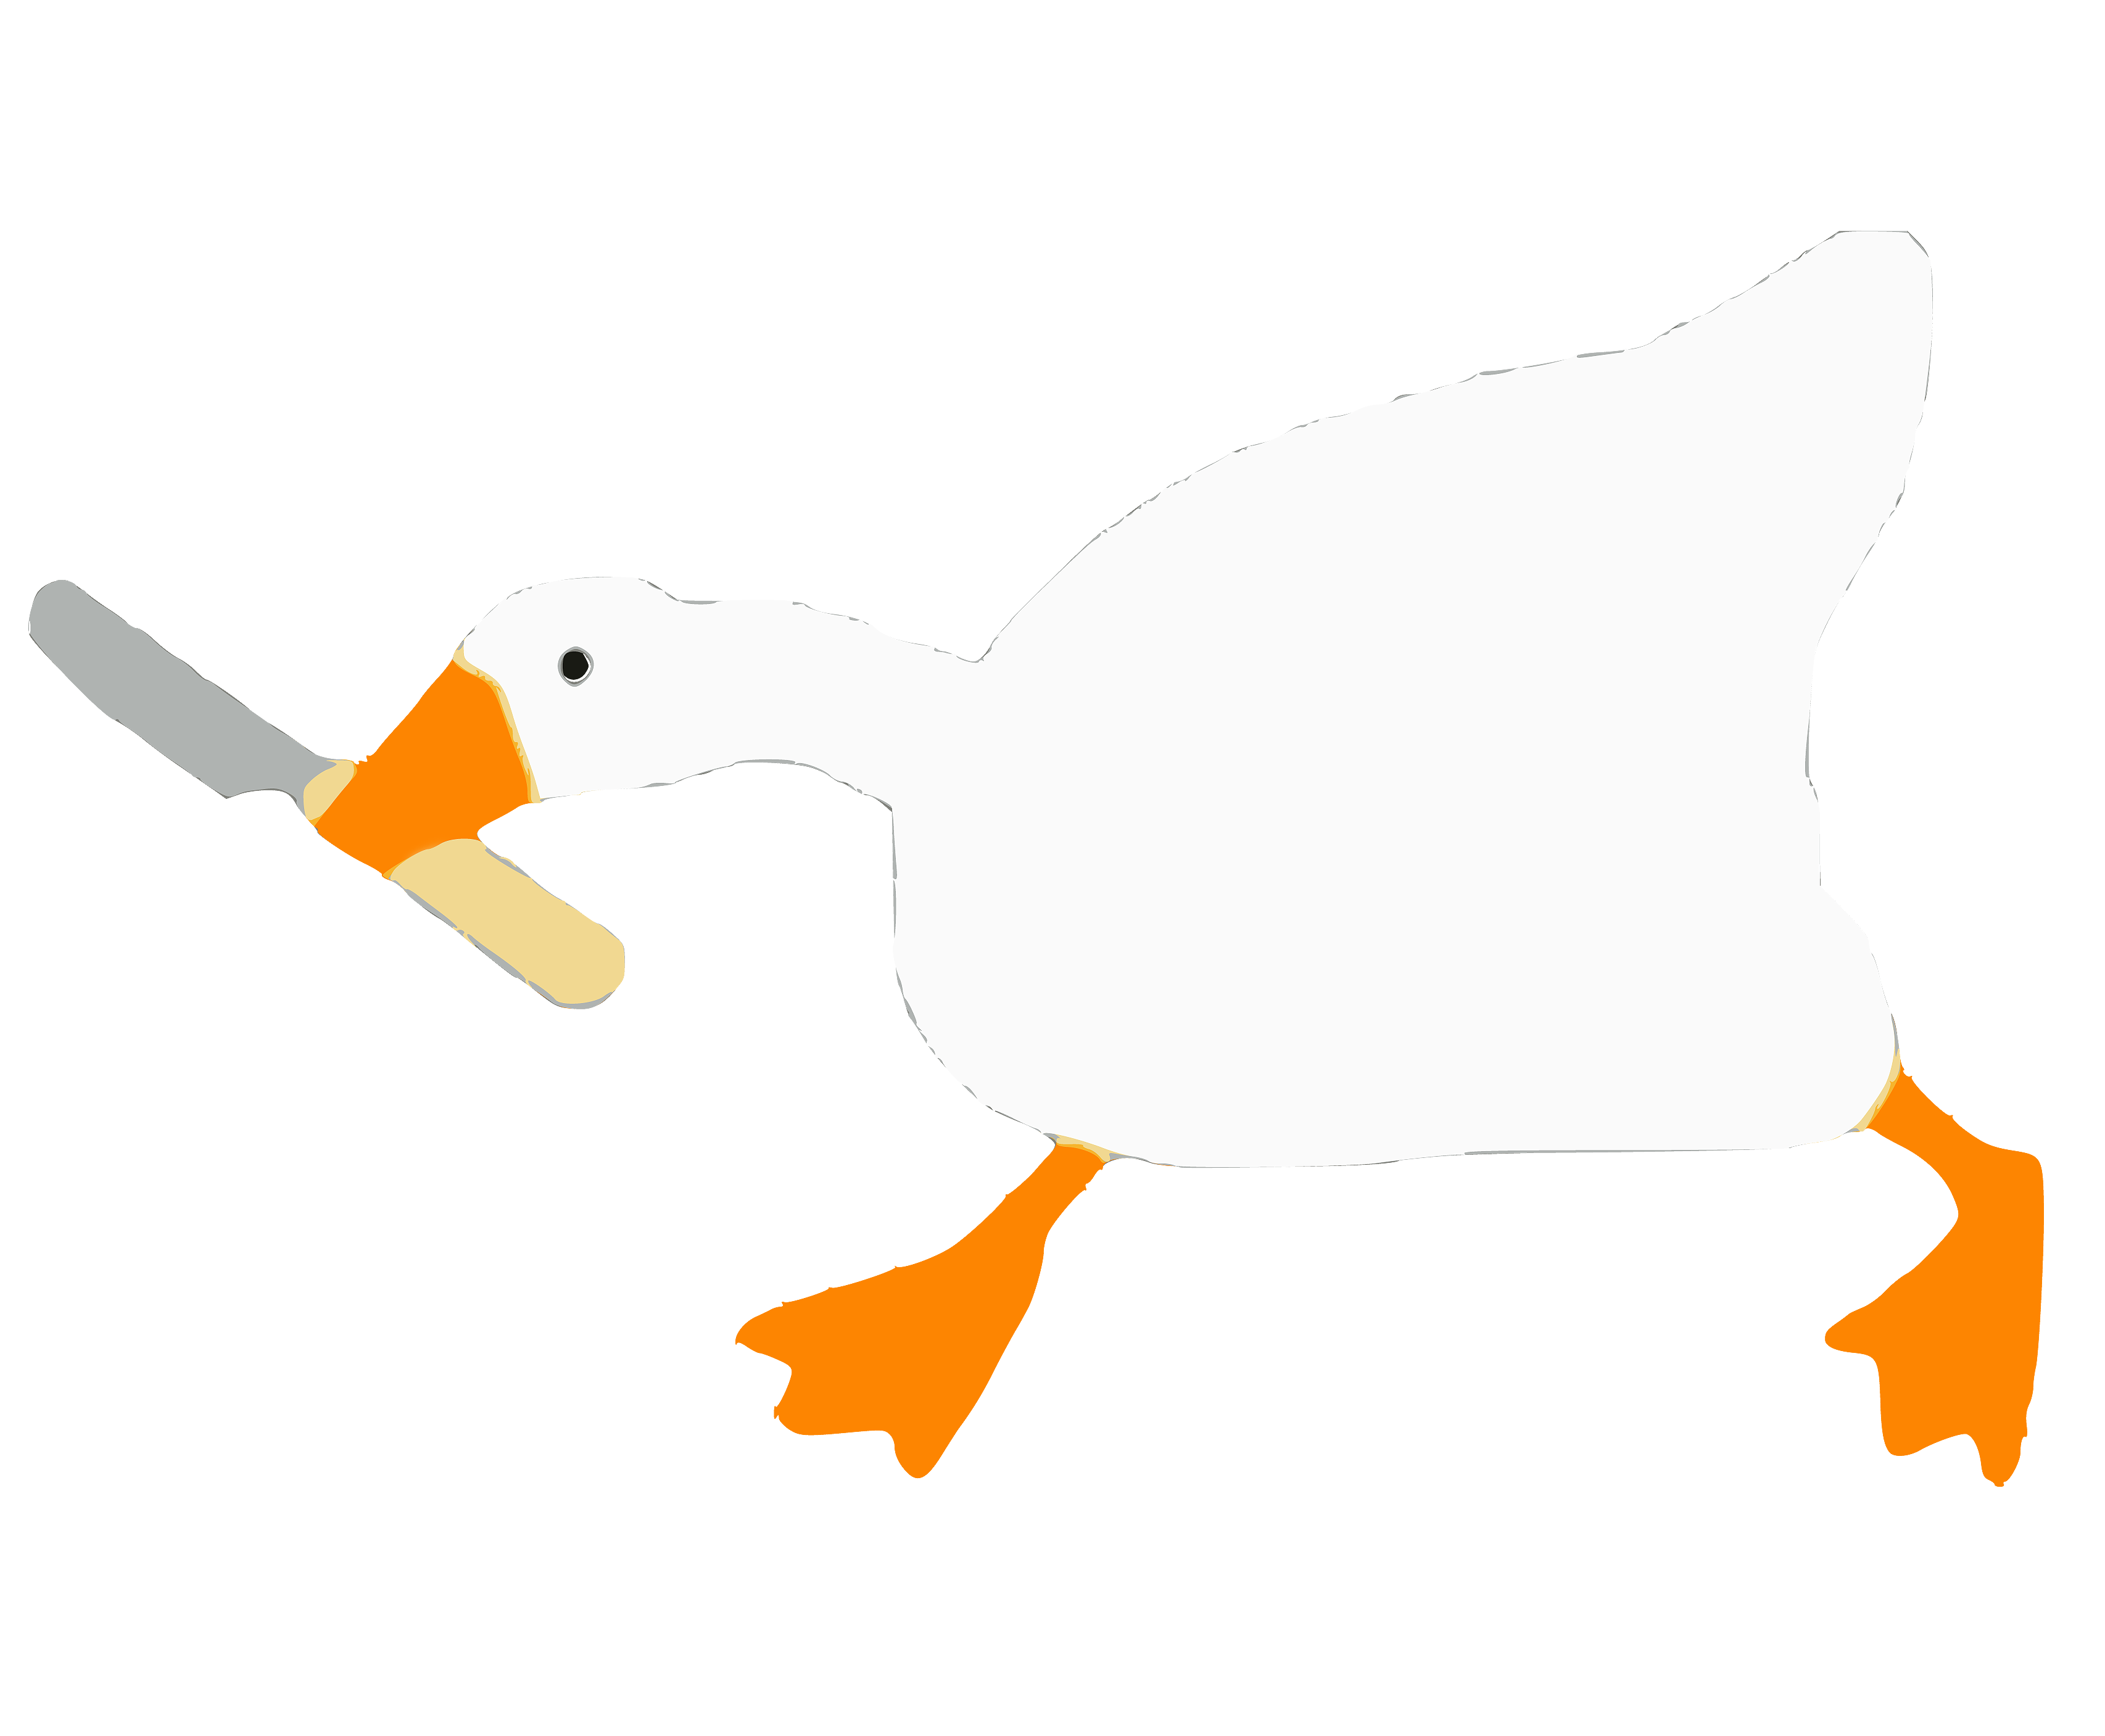 goose goose duck nude